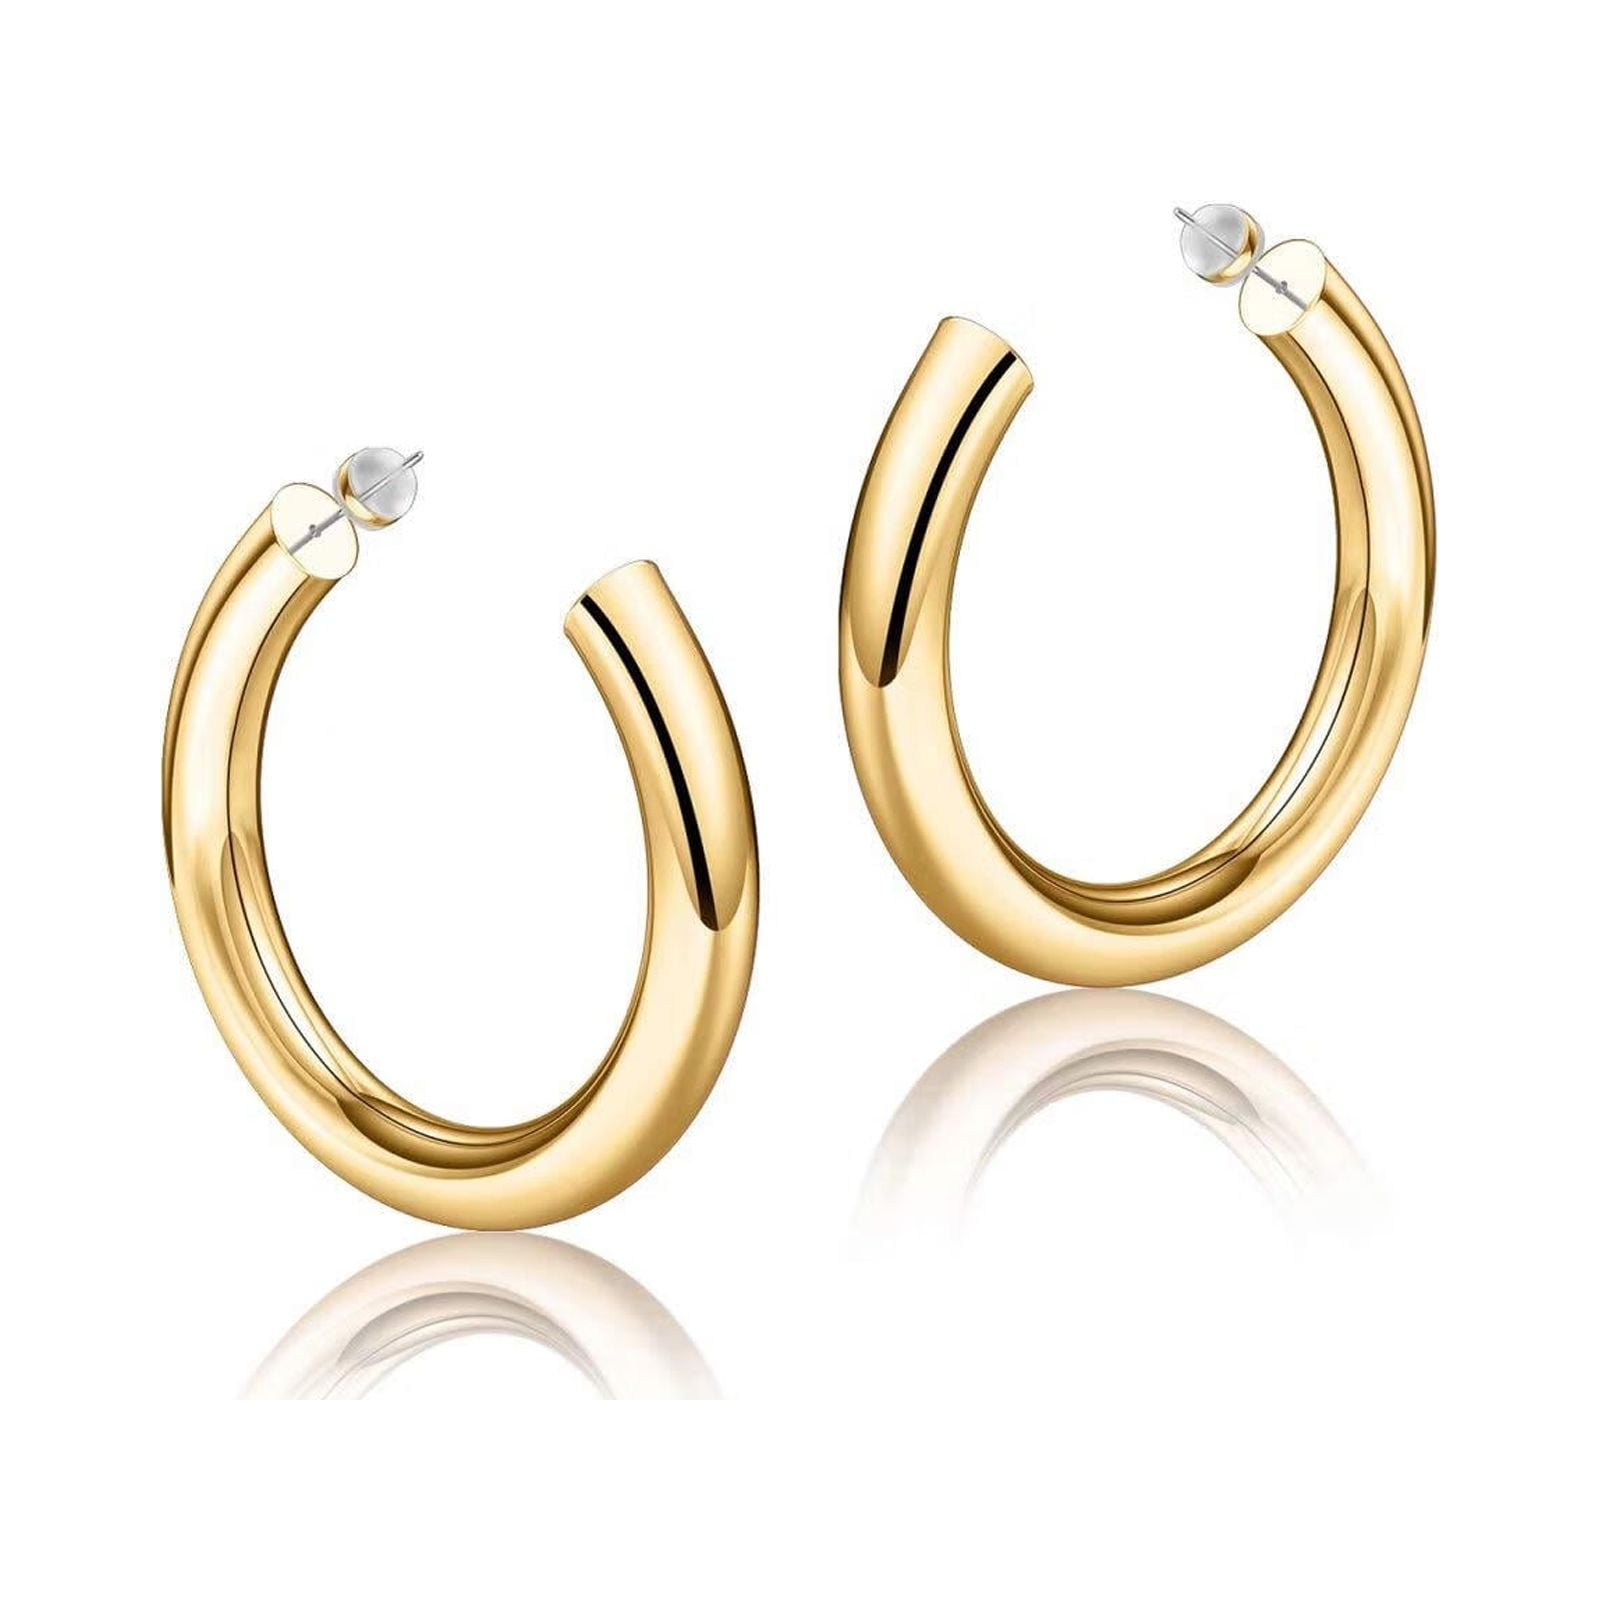  Anten Pink Chunky Gold Hoop Earrings for Women